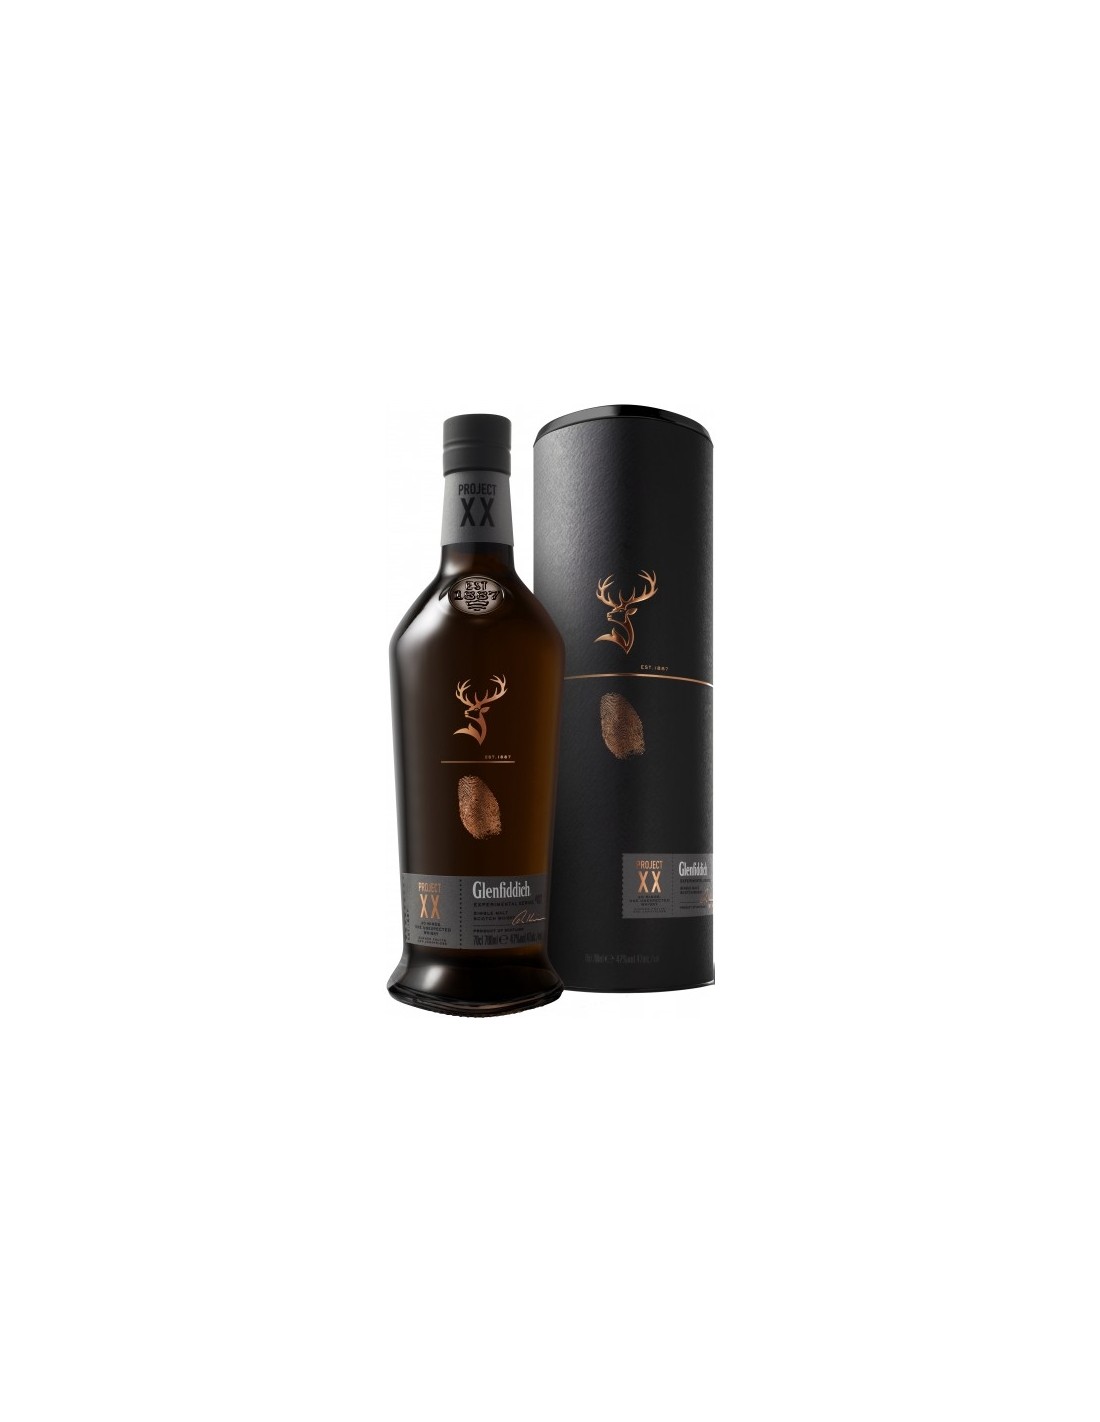 Whisky Glenfiddich Project XX 0.7L, 47% alc., Scotia alcooldiscount.ro